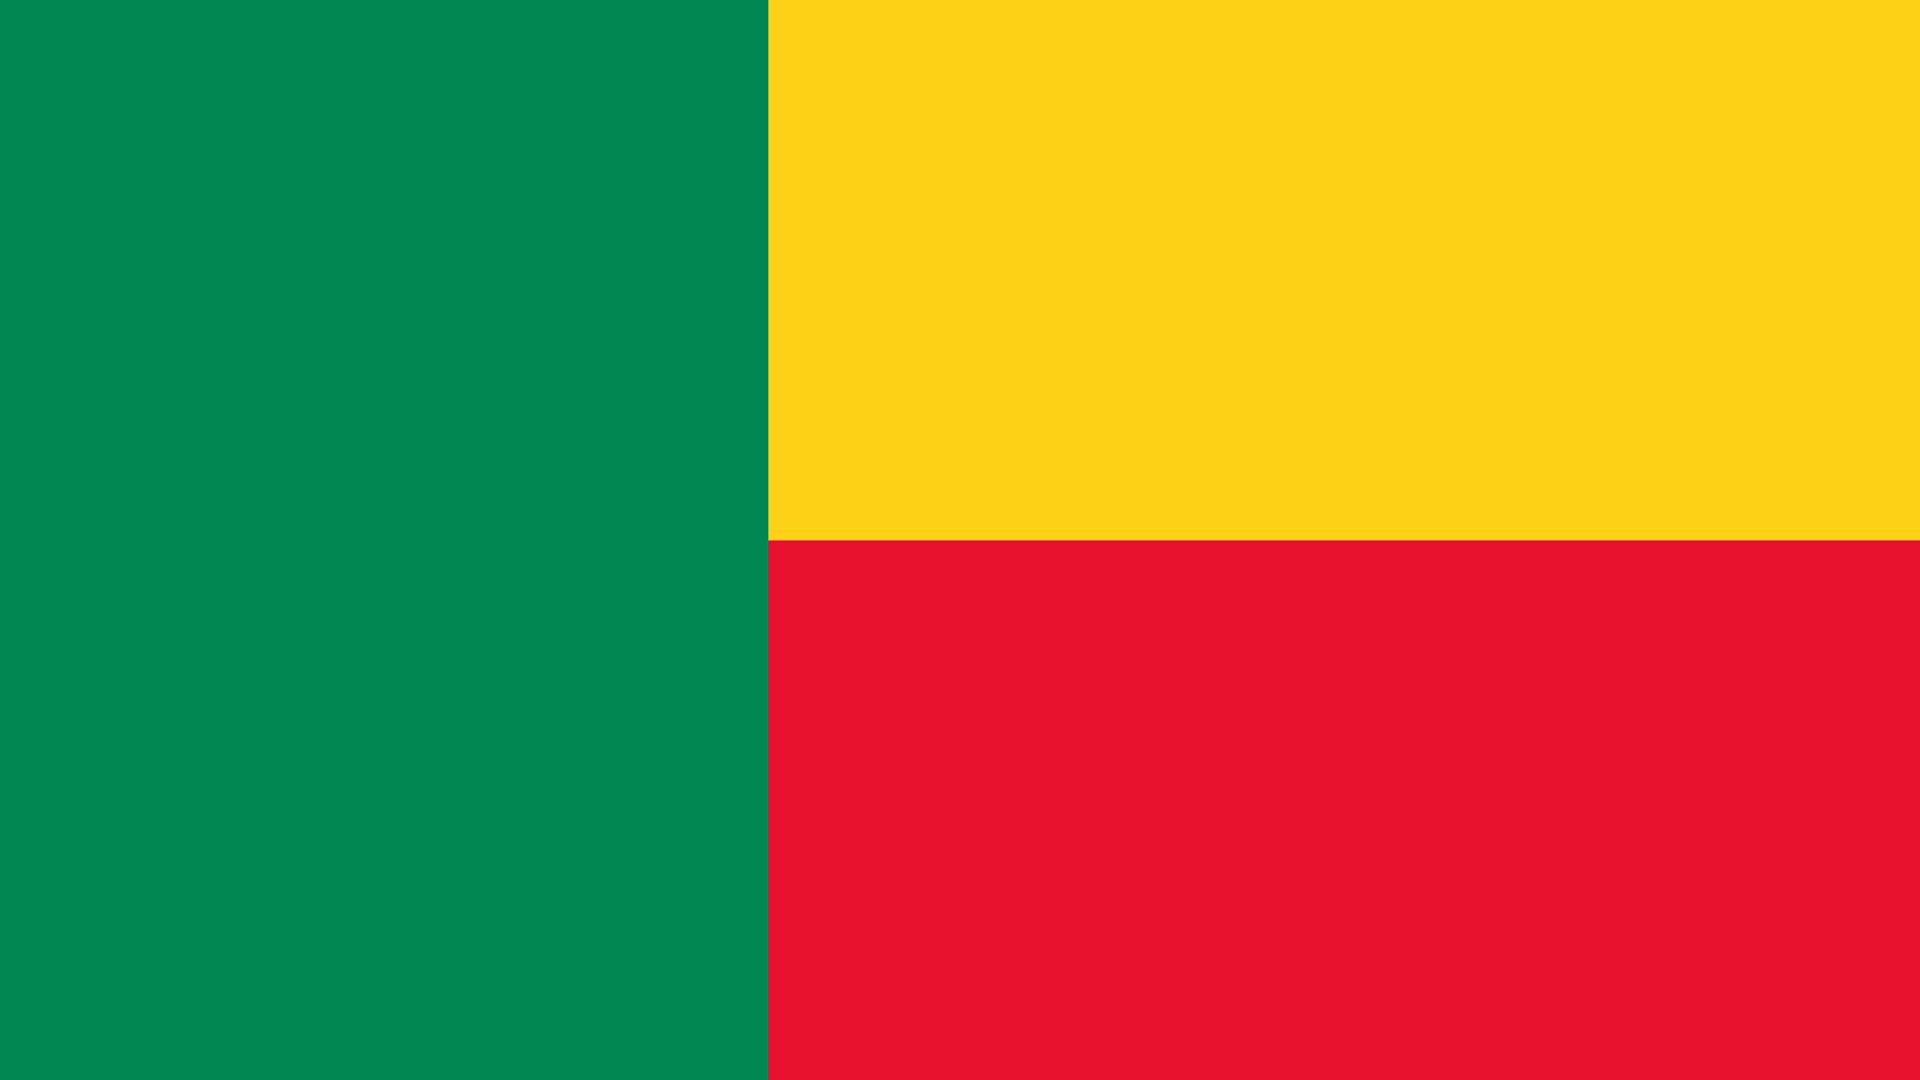 Benin Flag, High Definition, High Quality, Widescreen